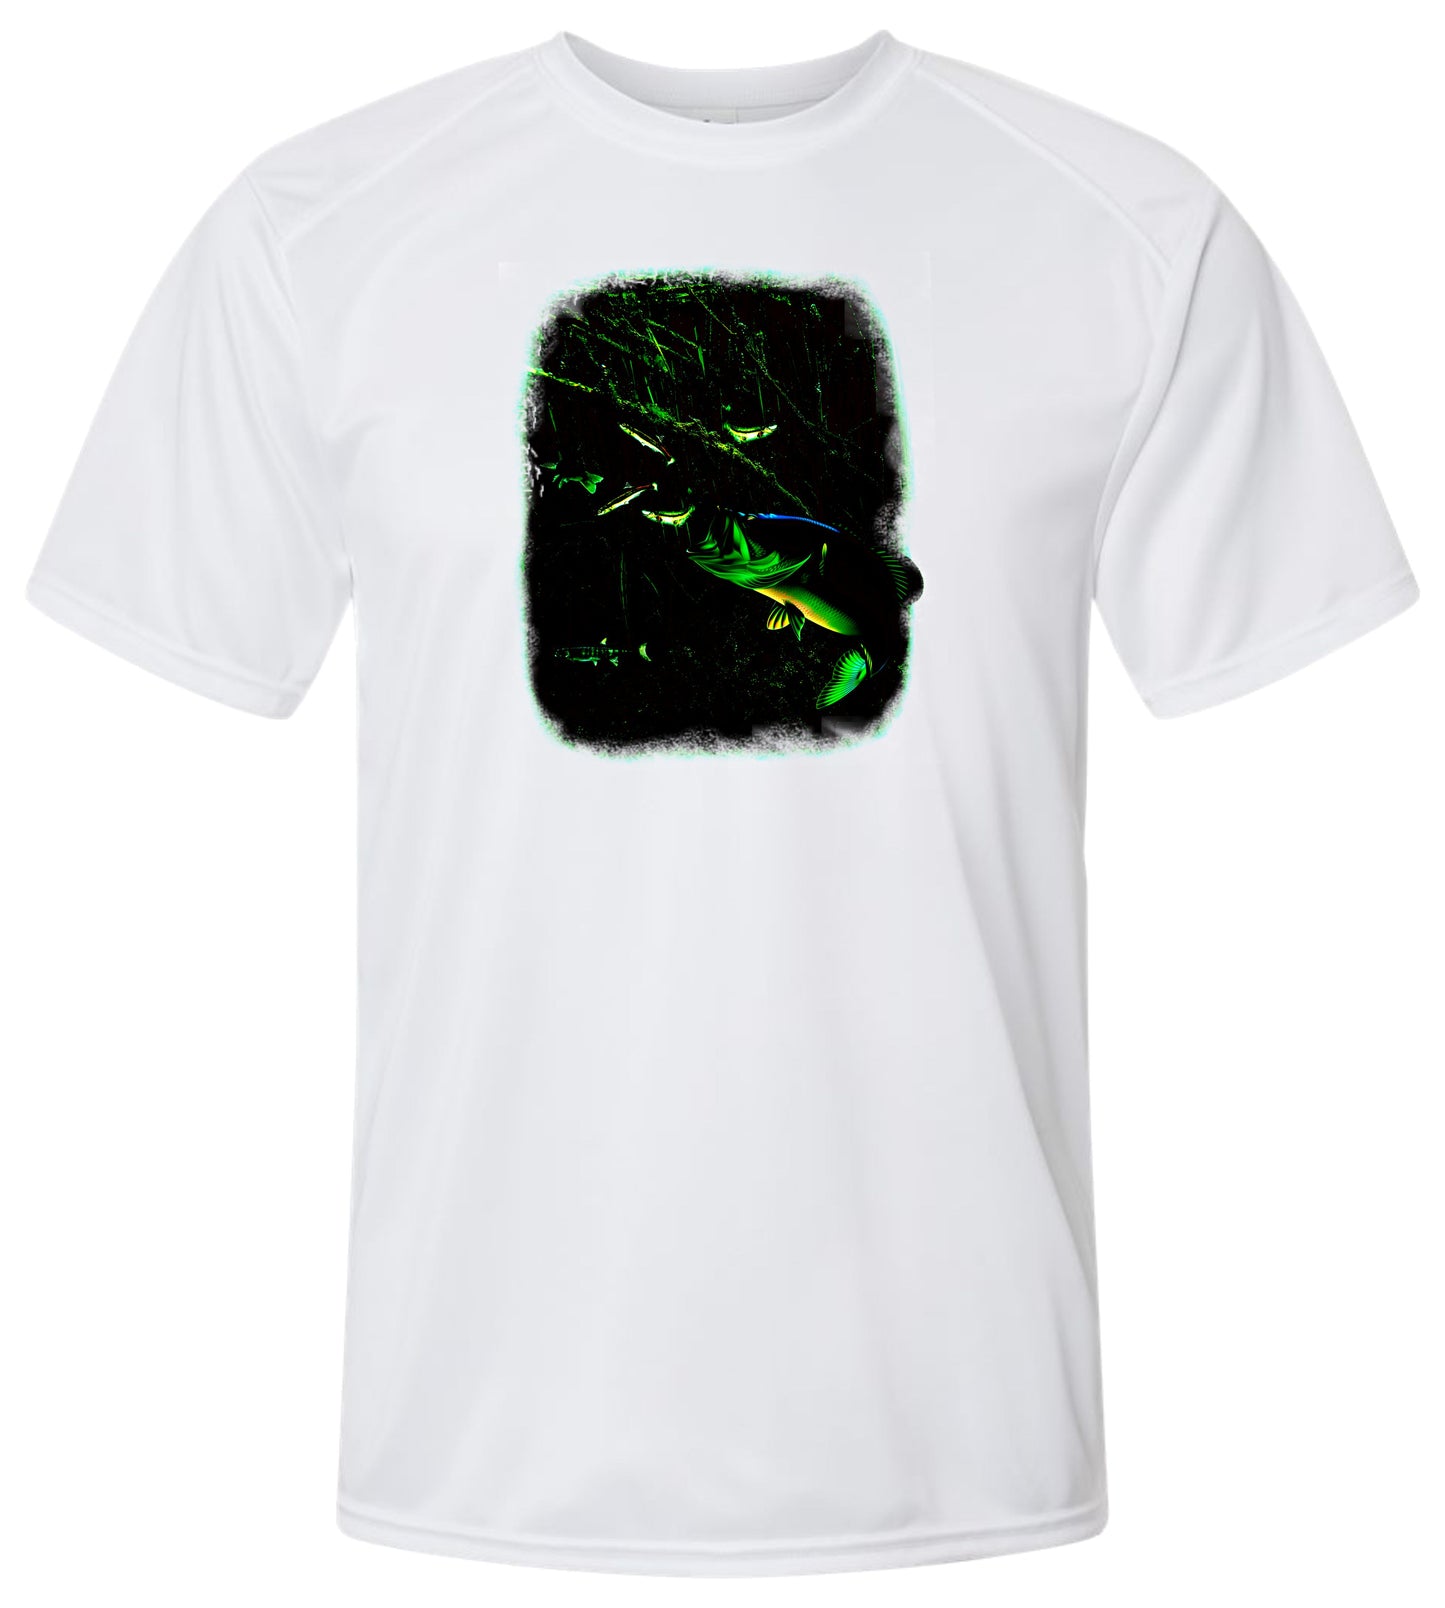 14 SM Green Bass White Tee Short Sleeve UPF 50+ Shirt Fishing Shirt Lake Shirt Beach Shirt Outdoor Shirt Wildlife Shirt